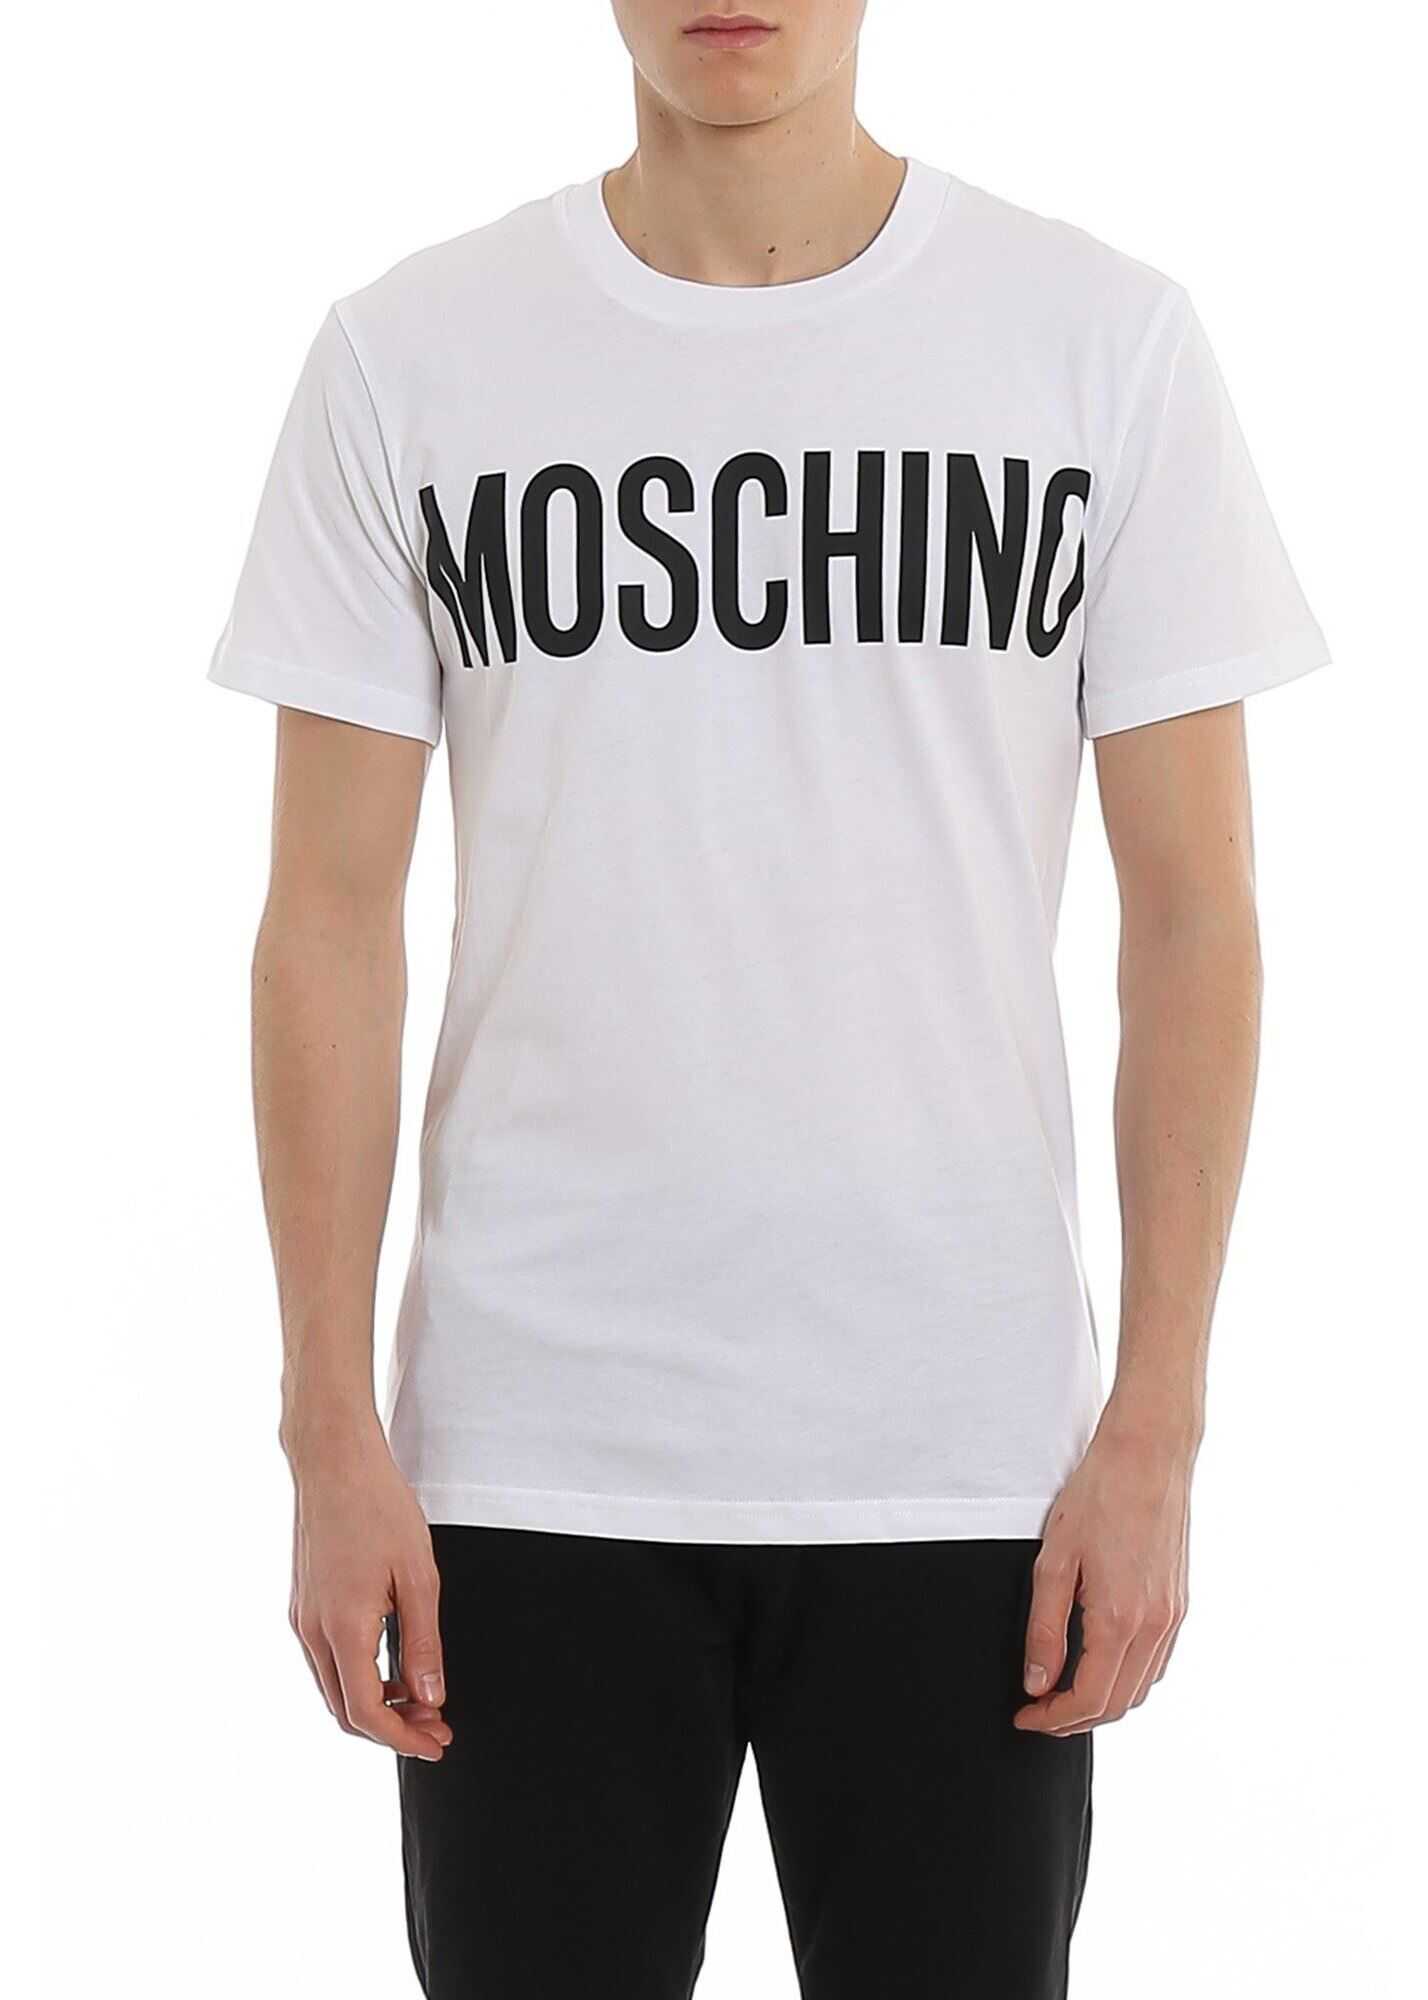 Moschino Contrasting Logo Print White T-Shirt White